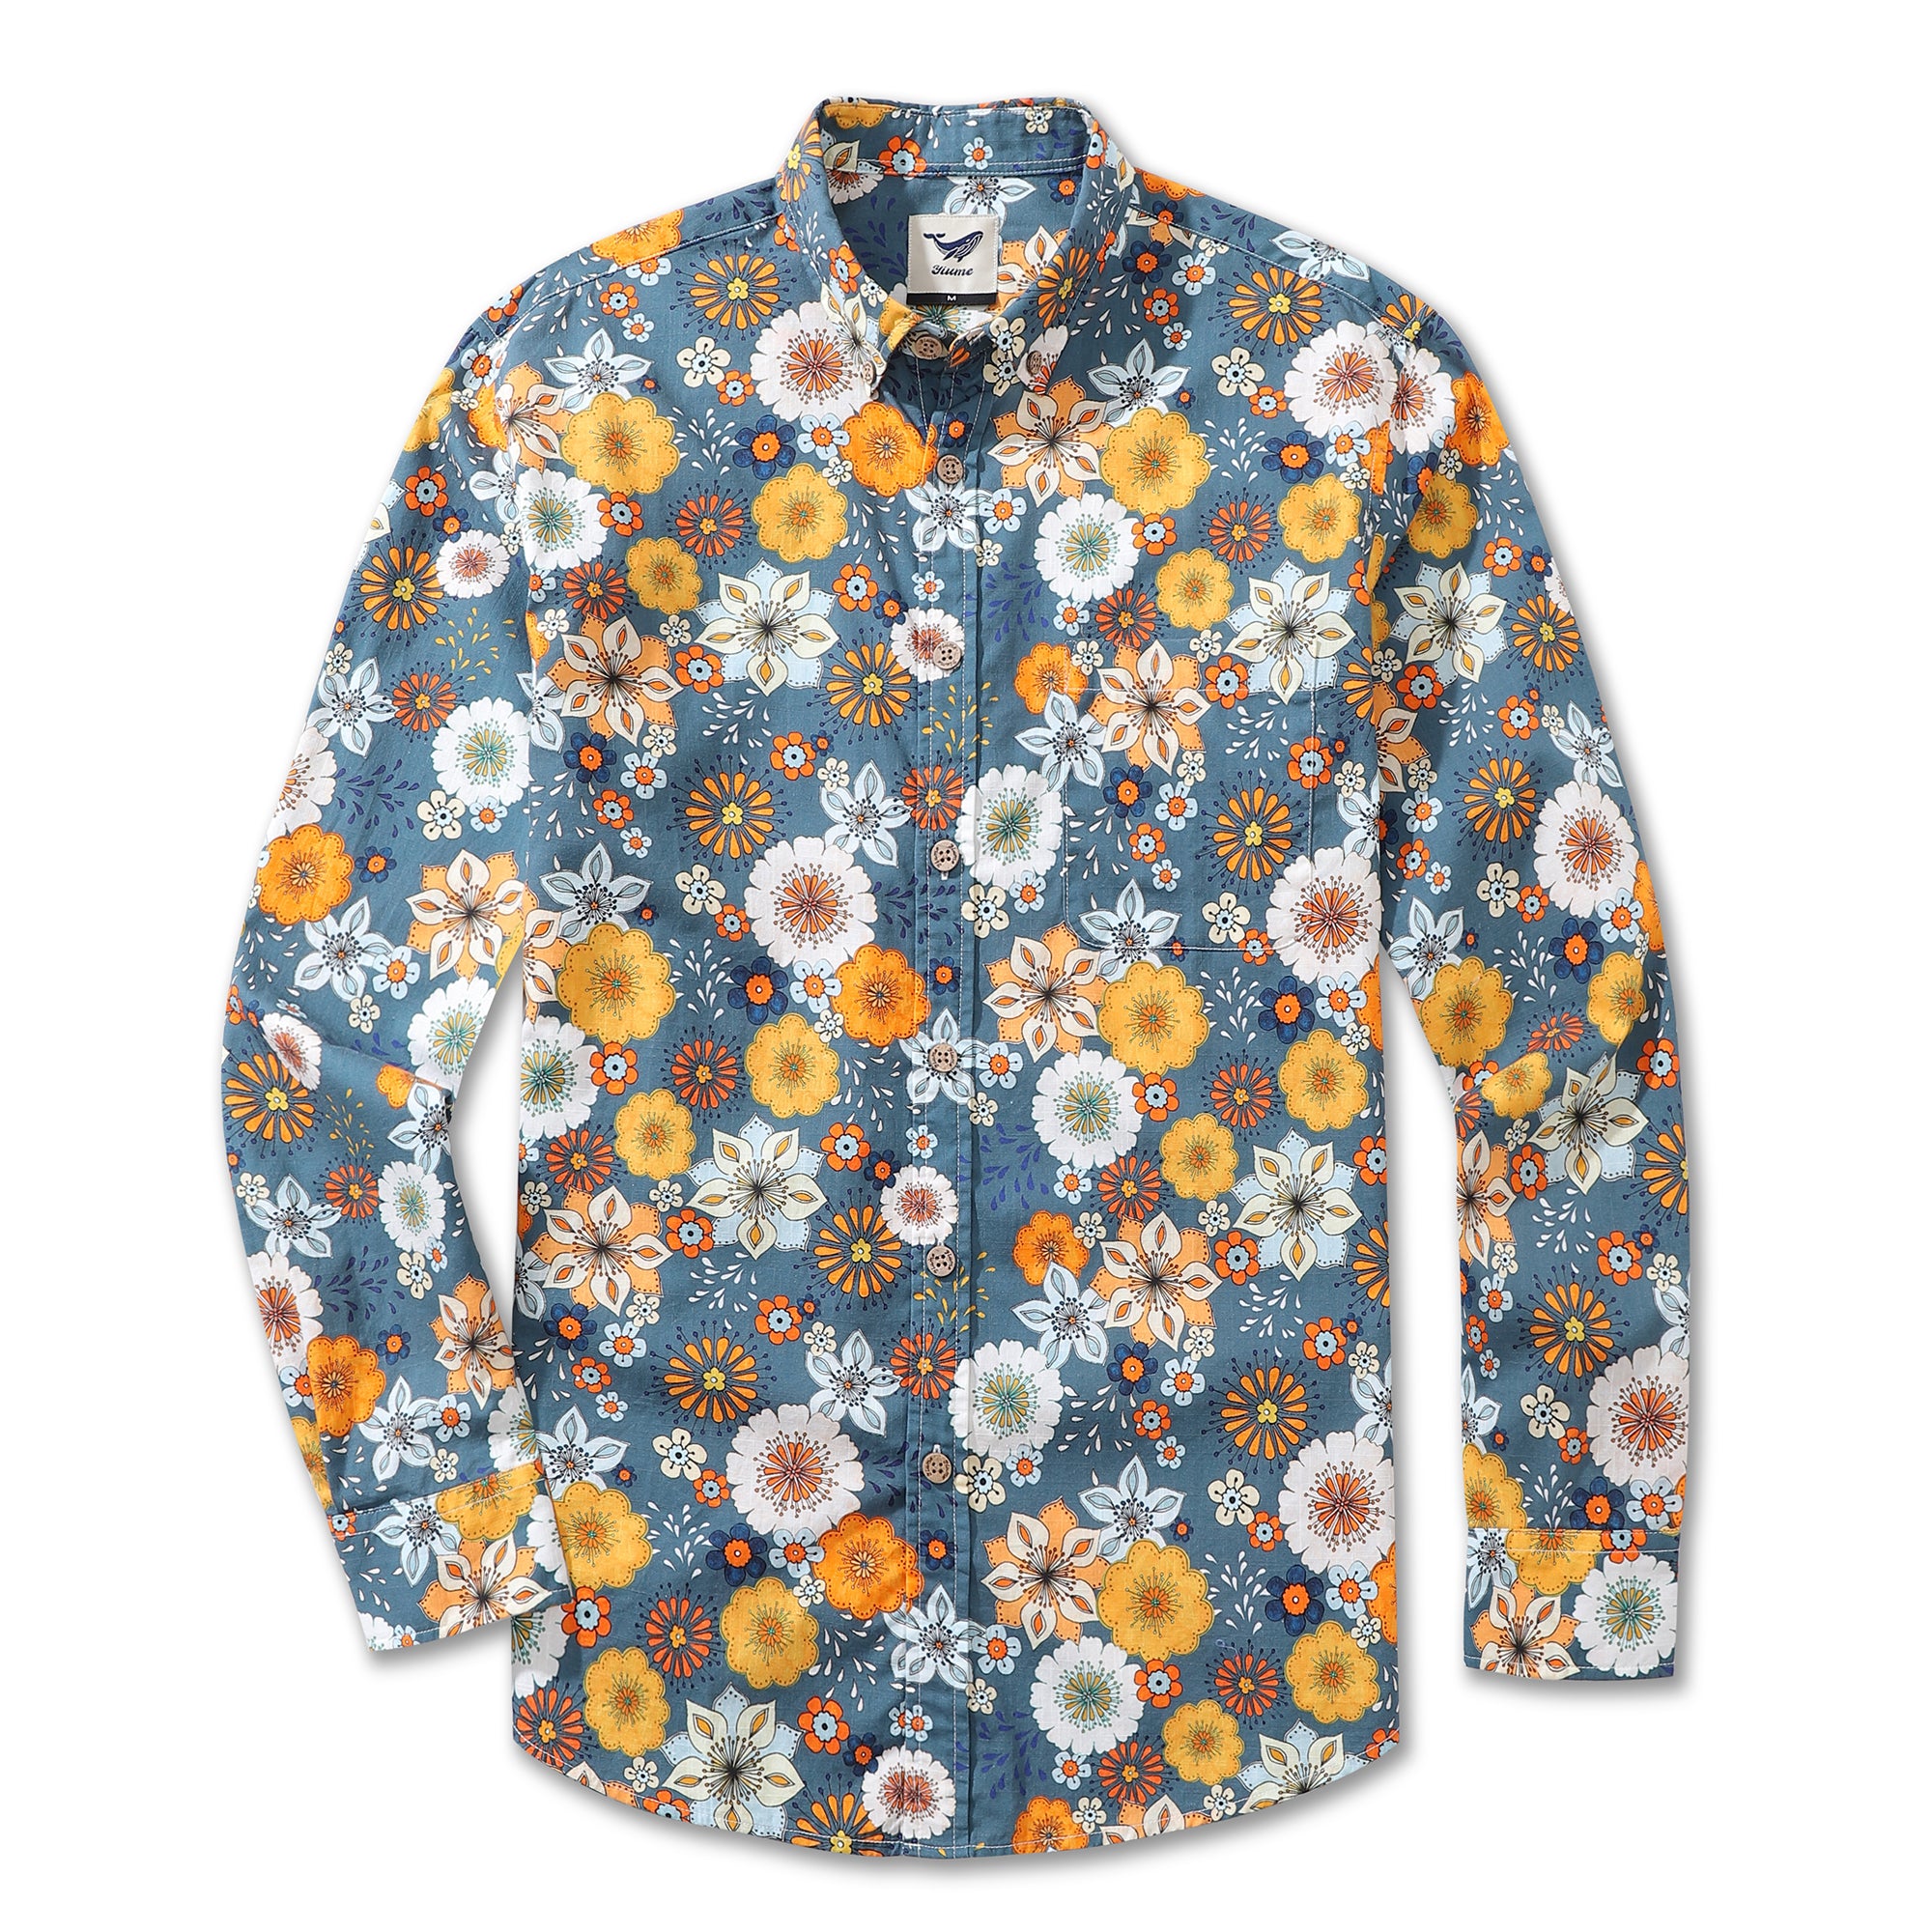 Men's Hawaiian Shirt 60's Floral Print By Samantha O' Malley Cotton Button-down Long Sleeve Aloha Shirt